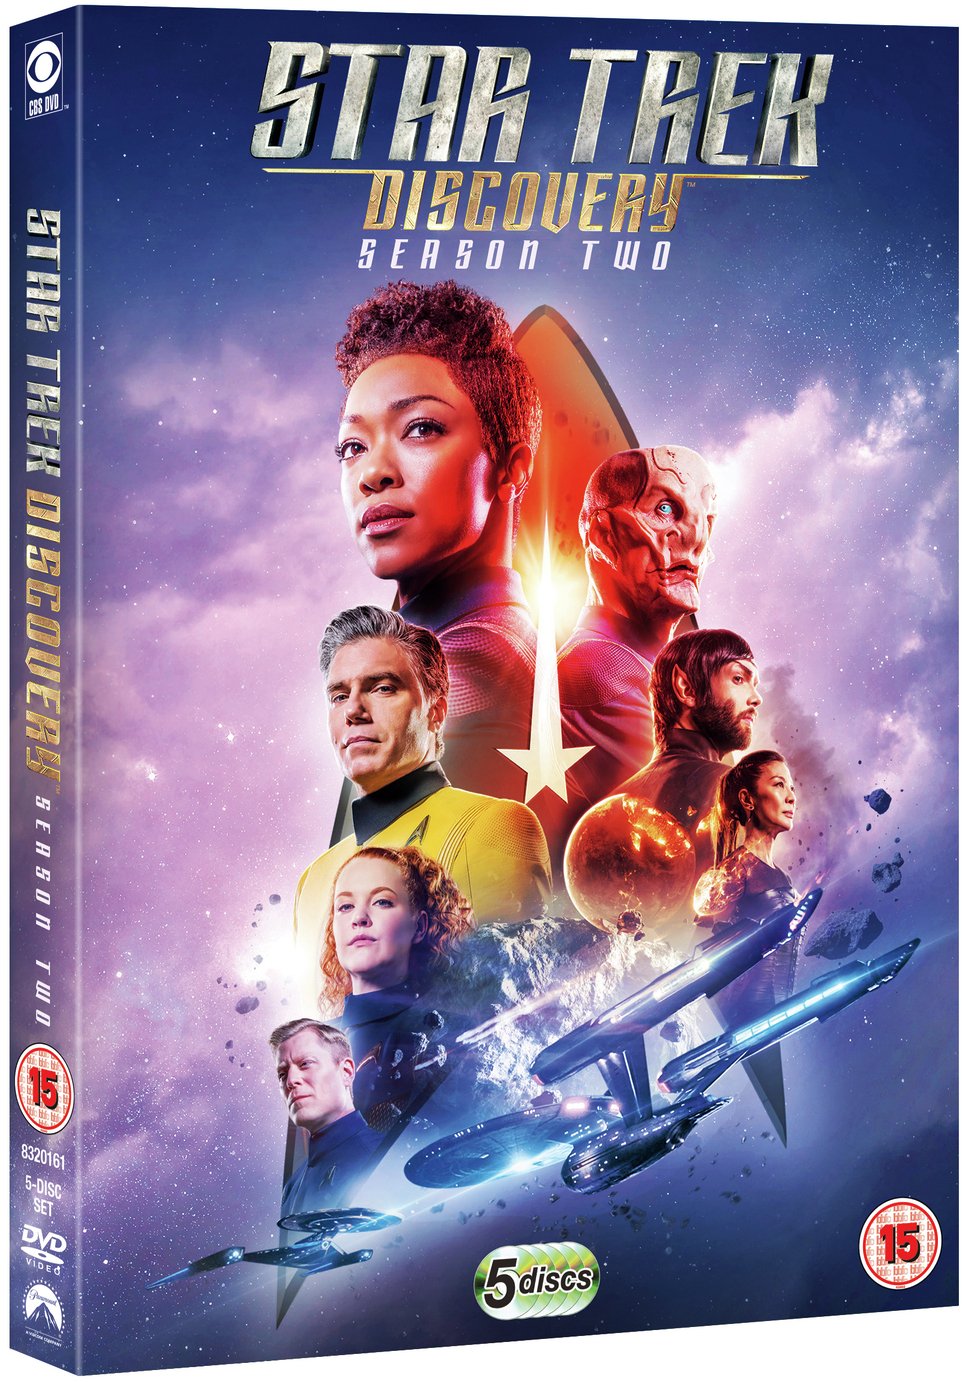 Star Trek Discovery Season 2 DVD Box Set